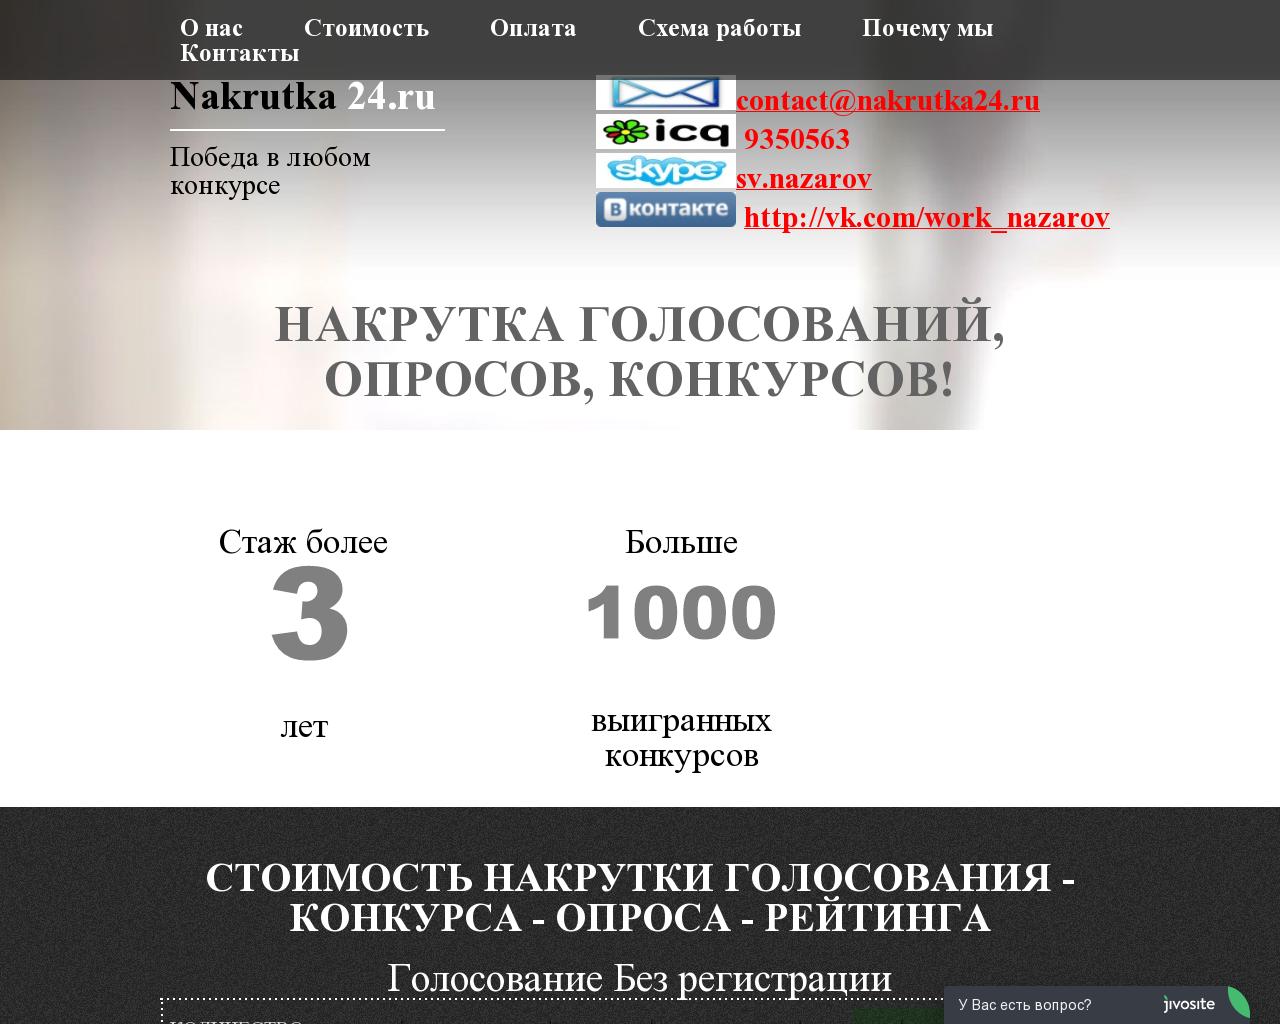 Изображение сайта nakrutka24.ru в разрешении 1280x1024